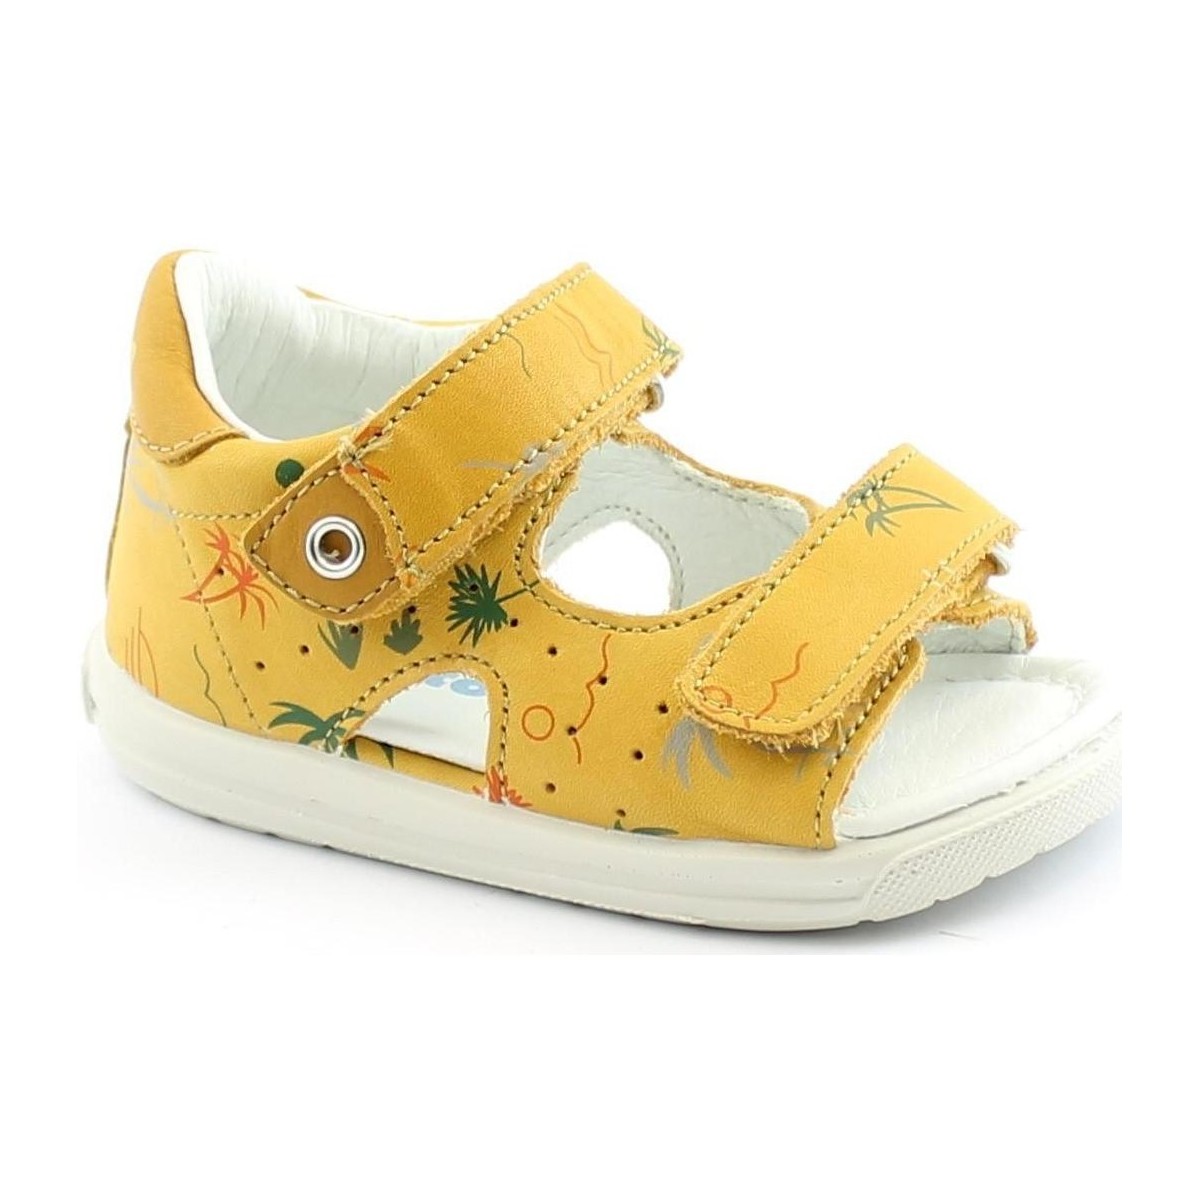 Schoenen Kinderen Sandalen / Open schoenen Naturino FAL-E21-500826-MA Geel